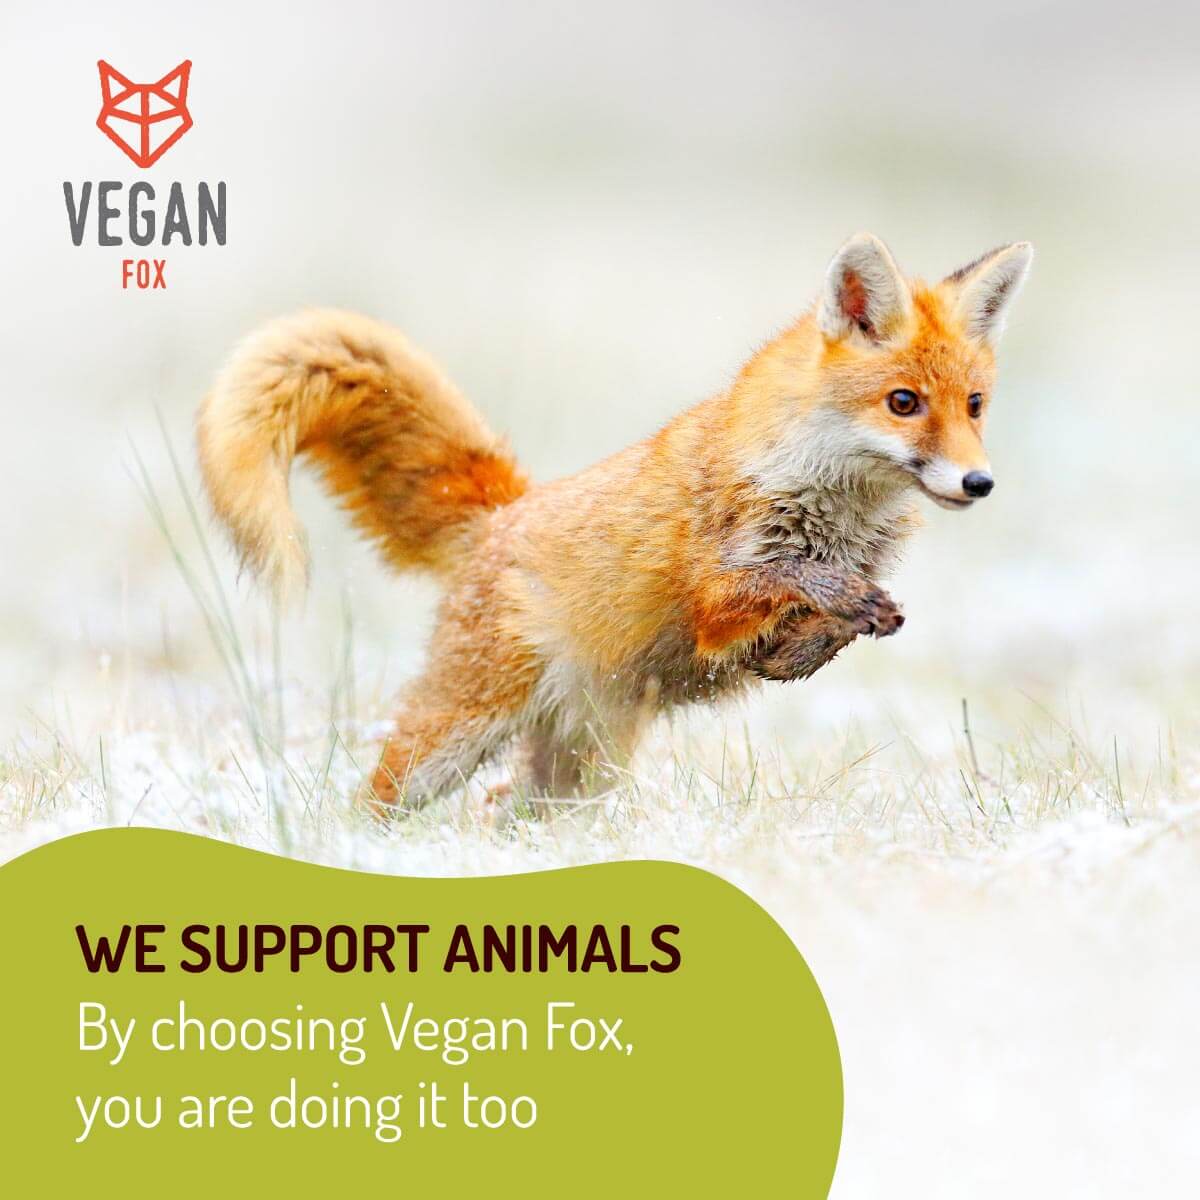 Vegan Fox supports animal welfare